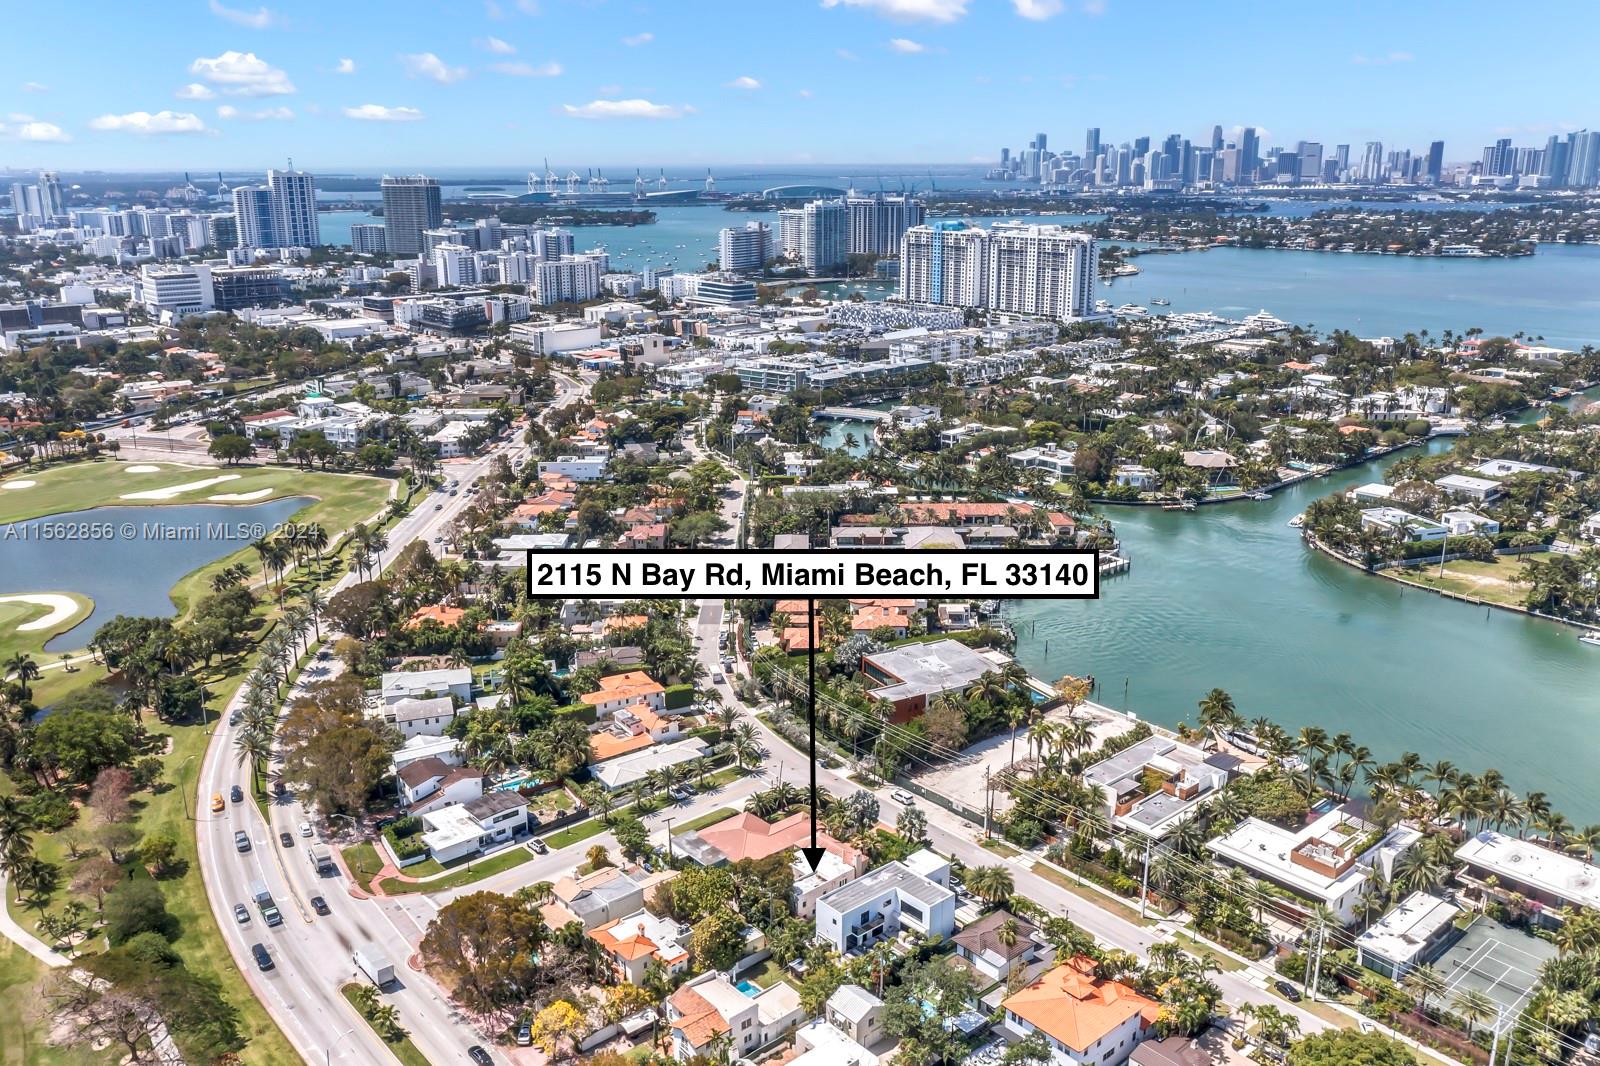 Rental Property at 2115 N Bay Rd Rd, Miami Beach, Miami-Dade County, Florida - Bedrooms: 6 
Bathrooms: 4  - $15,000 MO.